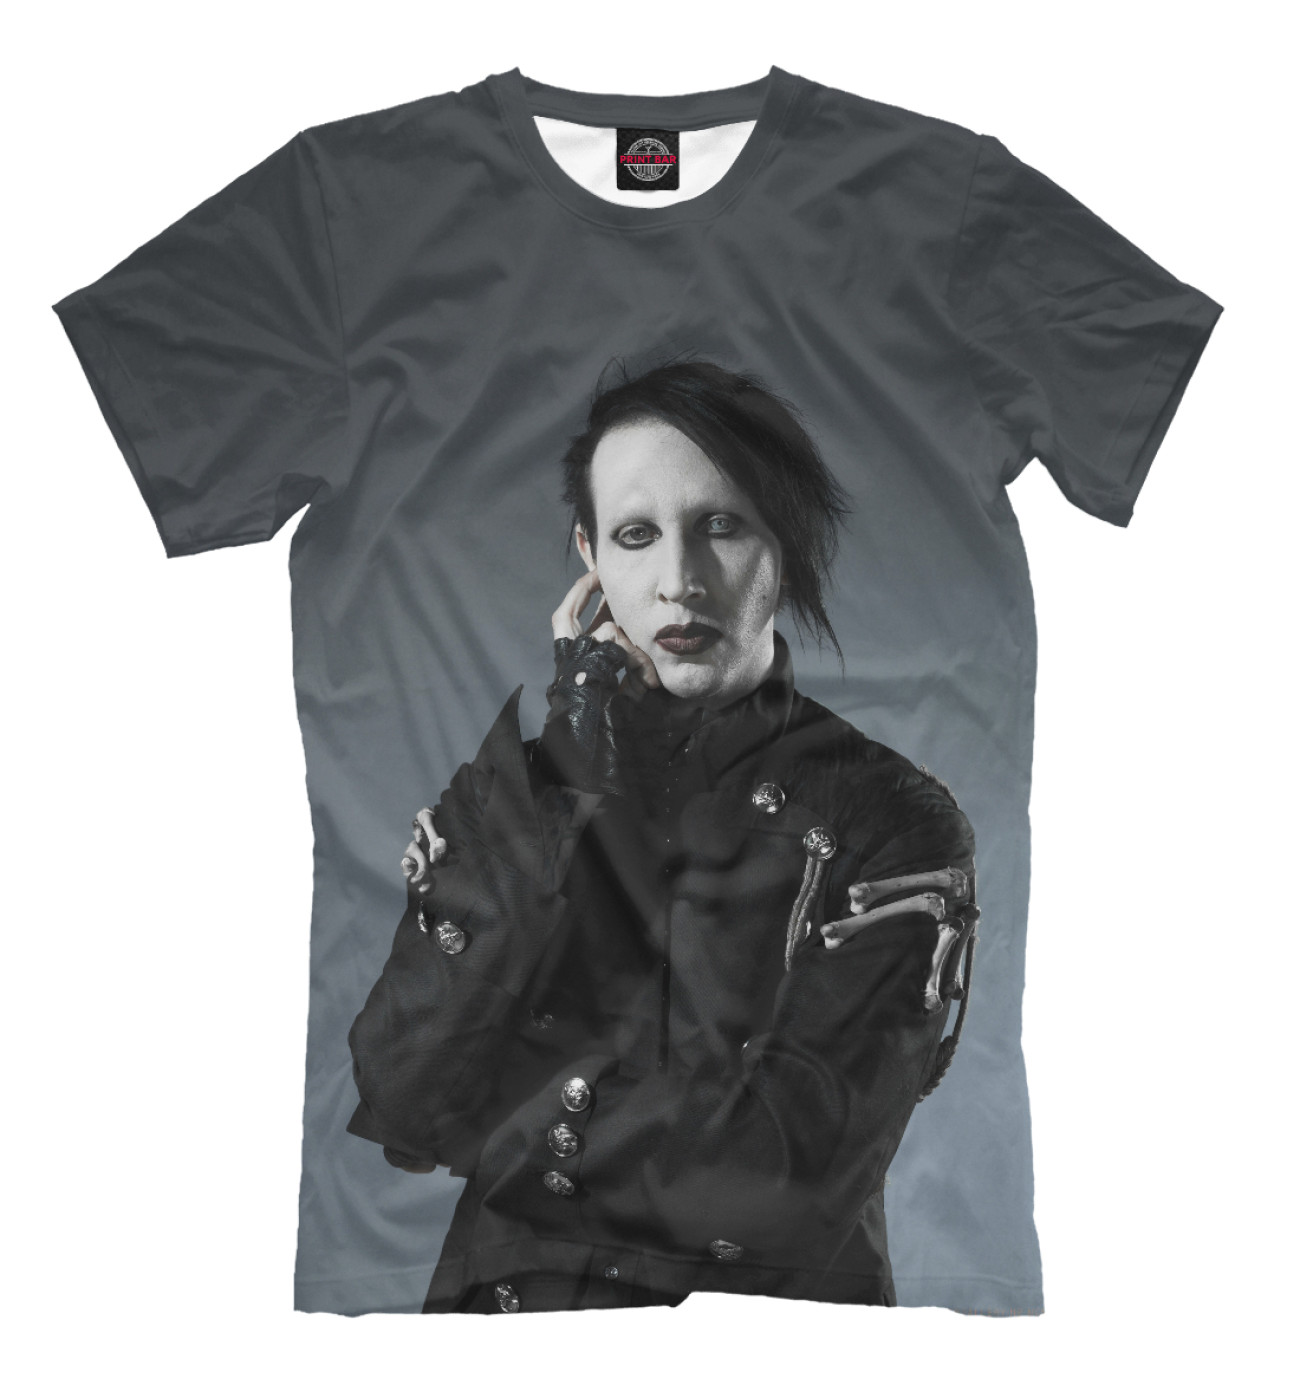 Мужская Футболка Marilyn Manson, артикул: MRM-552038-fut-2